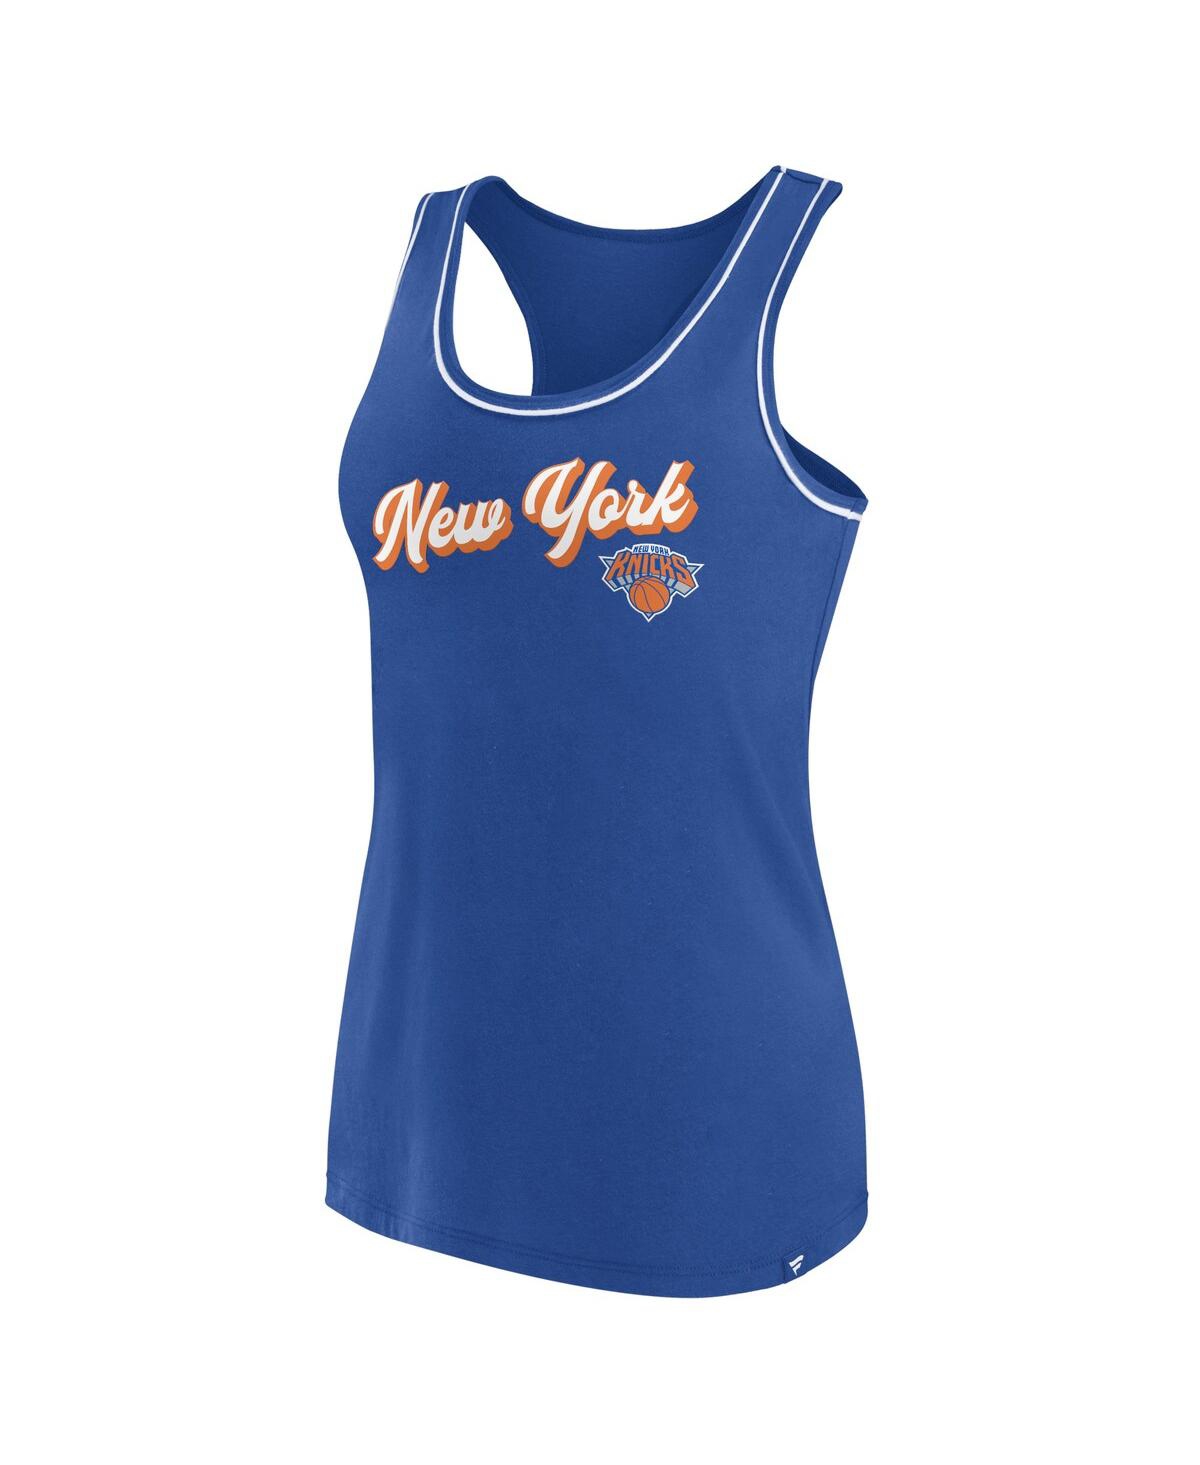 Shop Fanatics Women's  Blue New York Knicks Wordmark Logo Racerback Tank Top